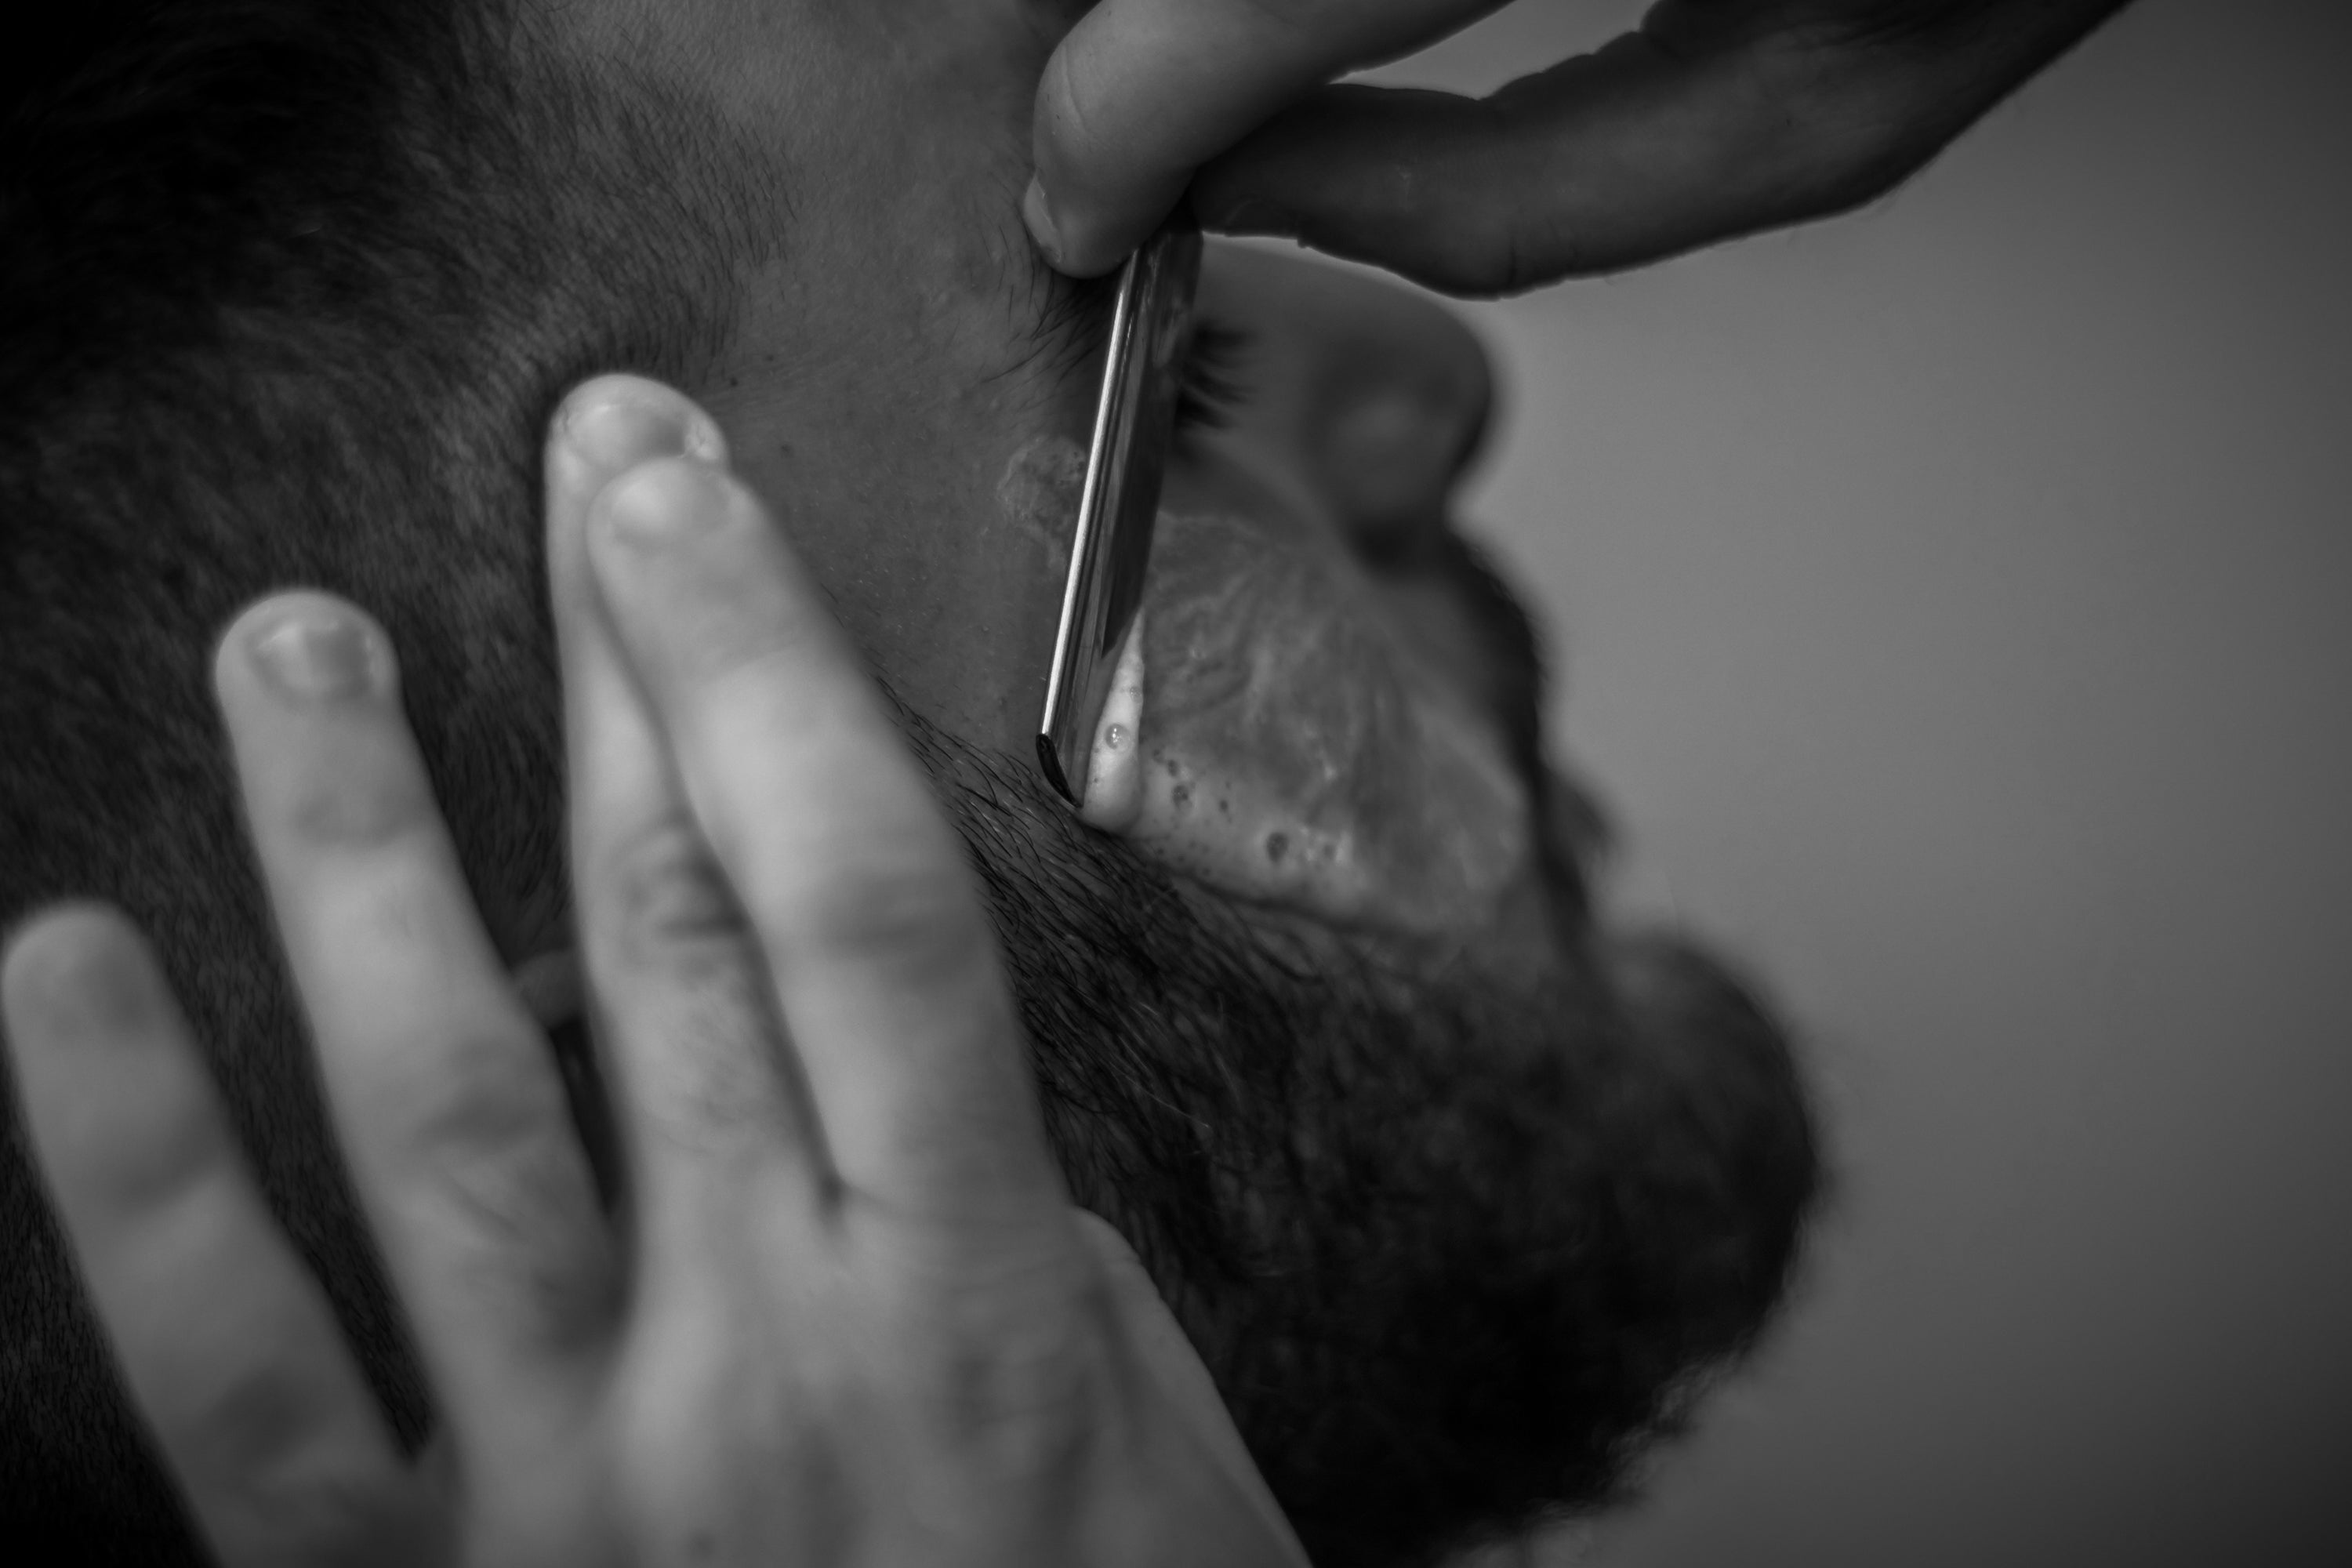 shaing beard with a cut-throat razor